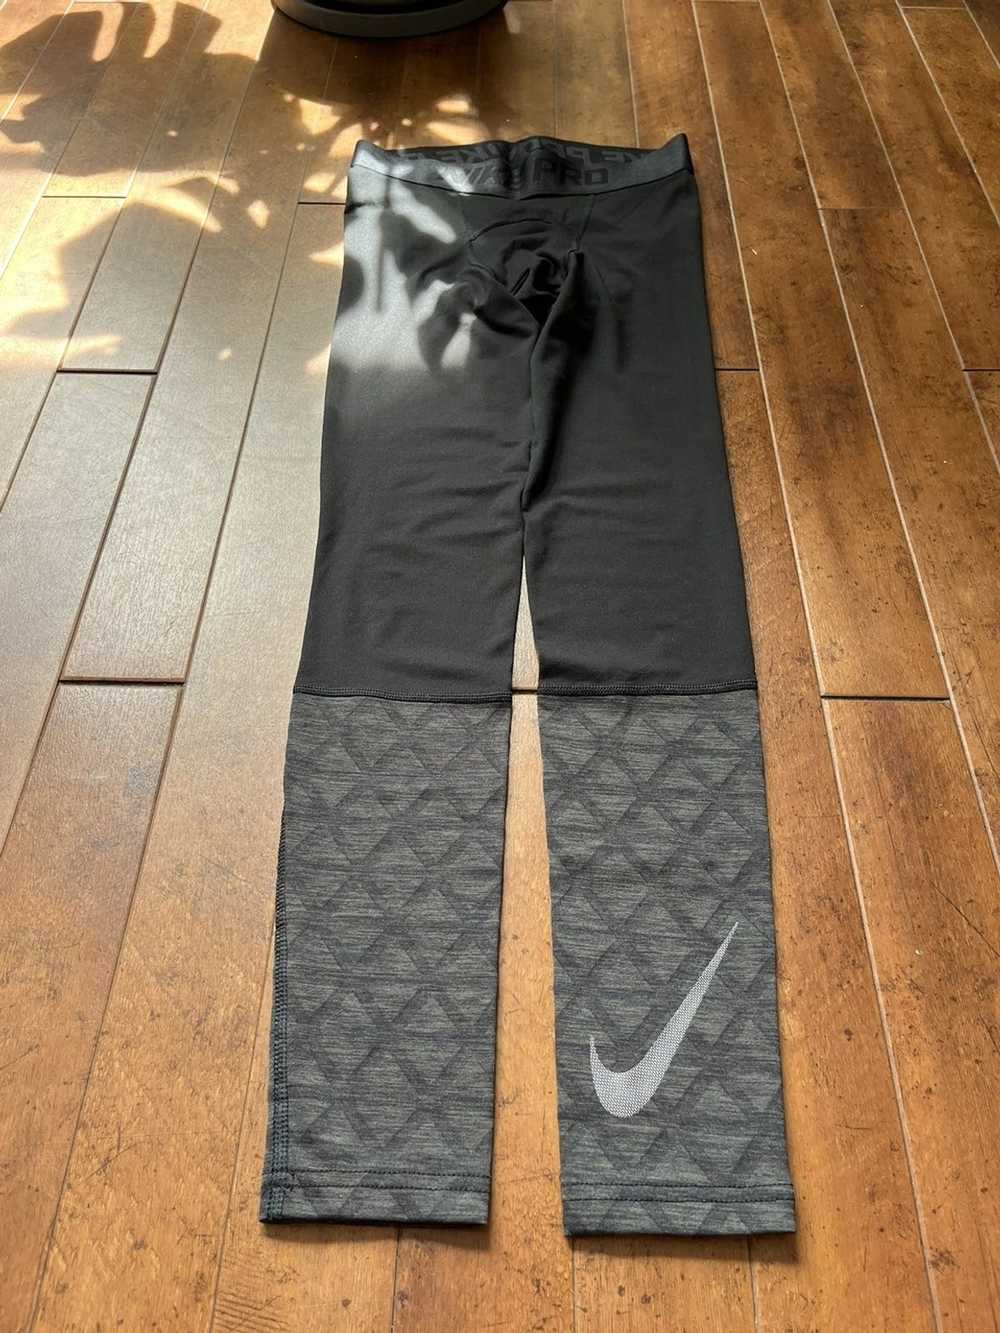 Nike Nike Pro Compression Pants US SIZE S - image 1